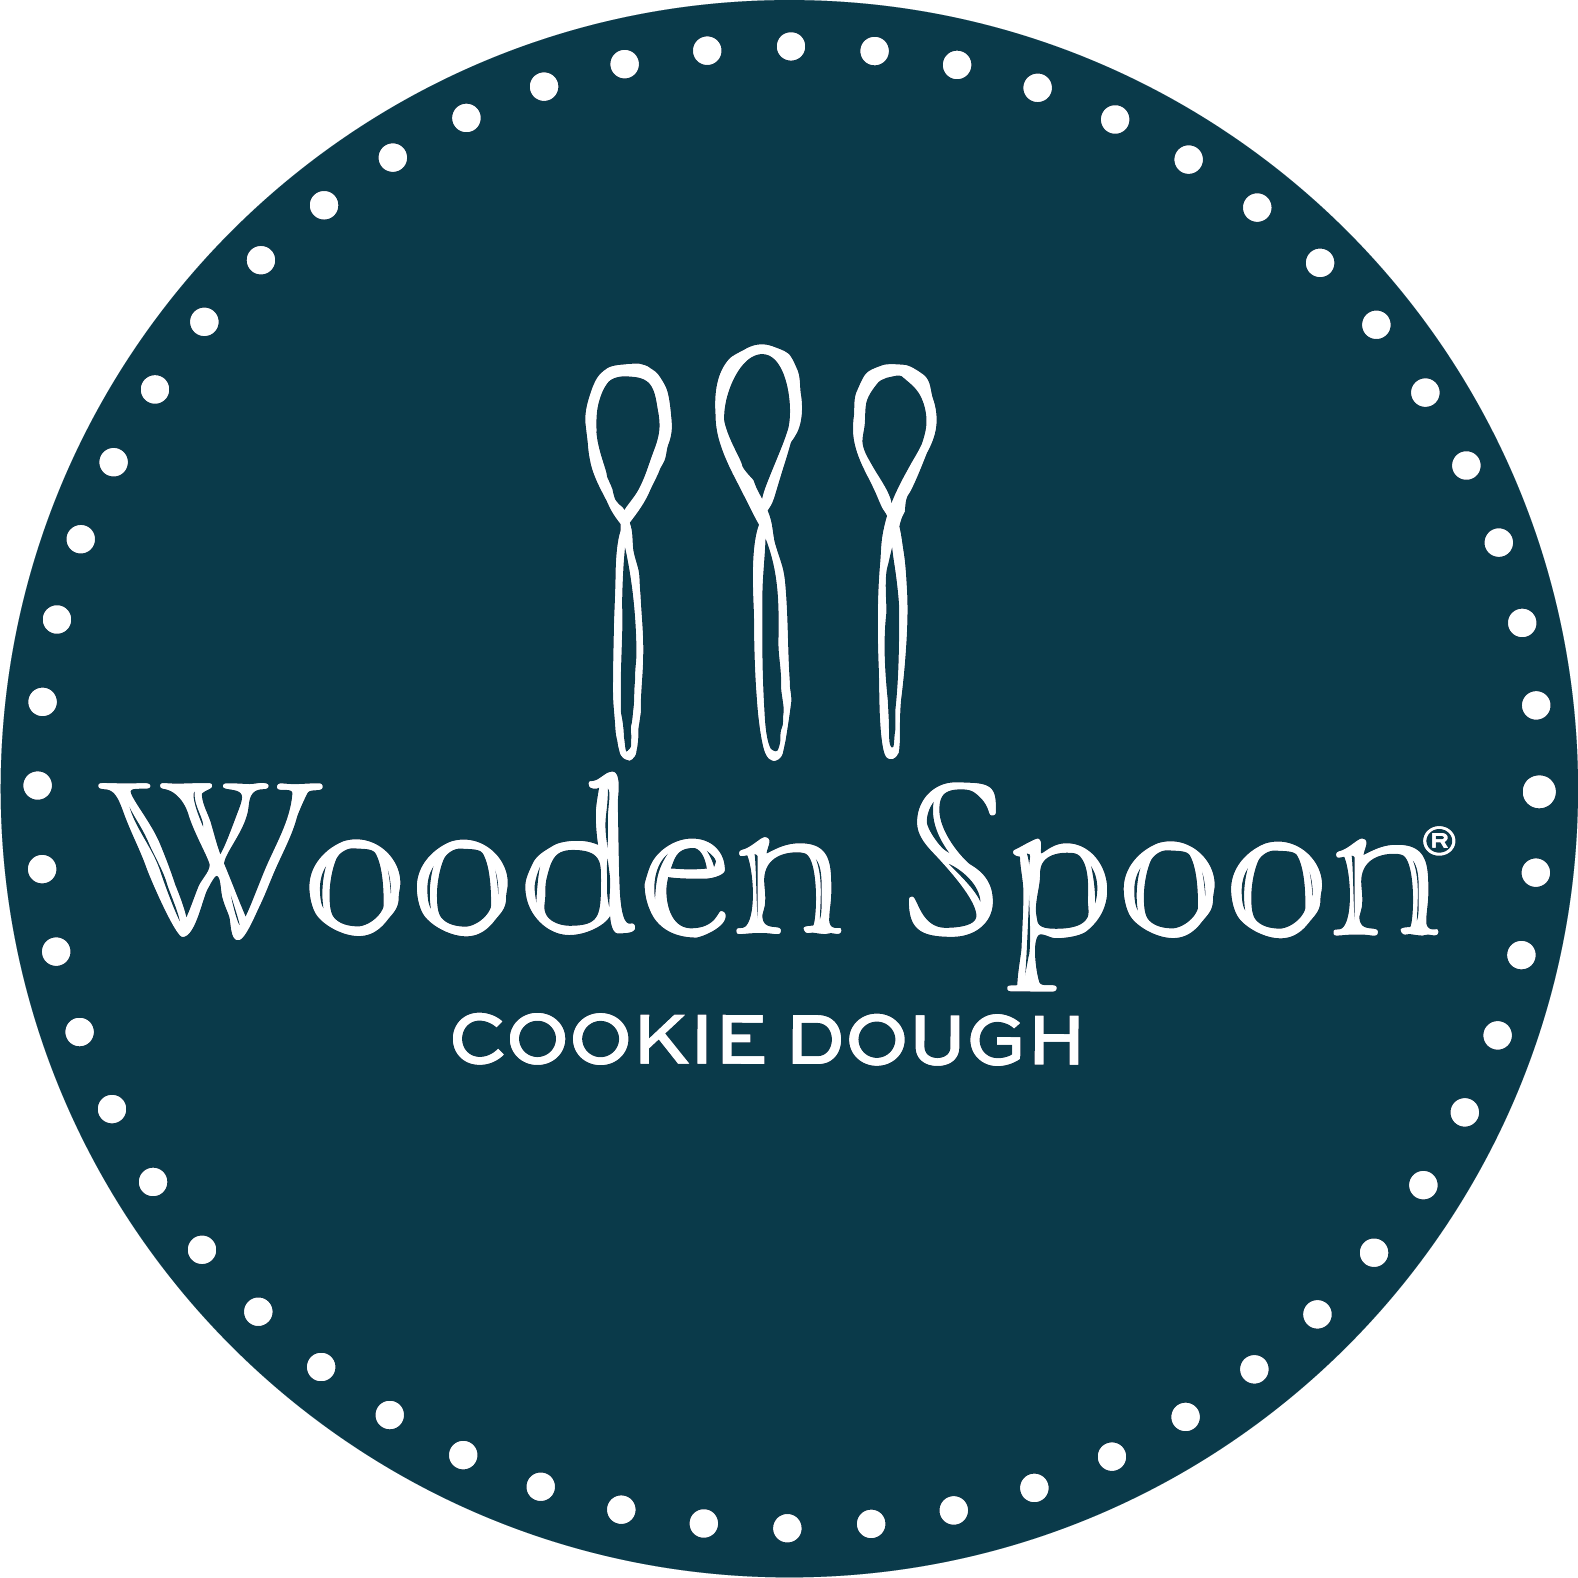 Wooden Spoon Cookie Dough logo